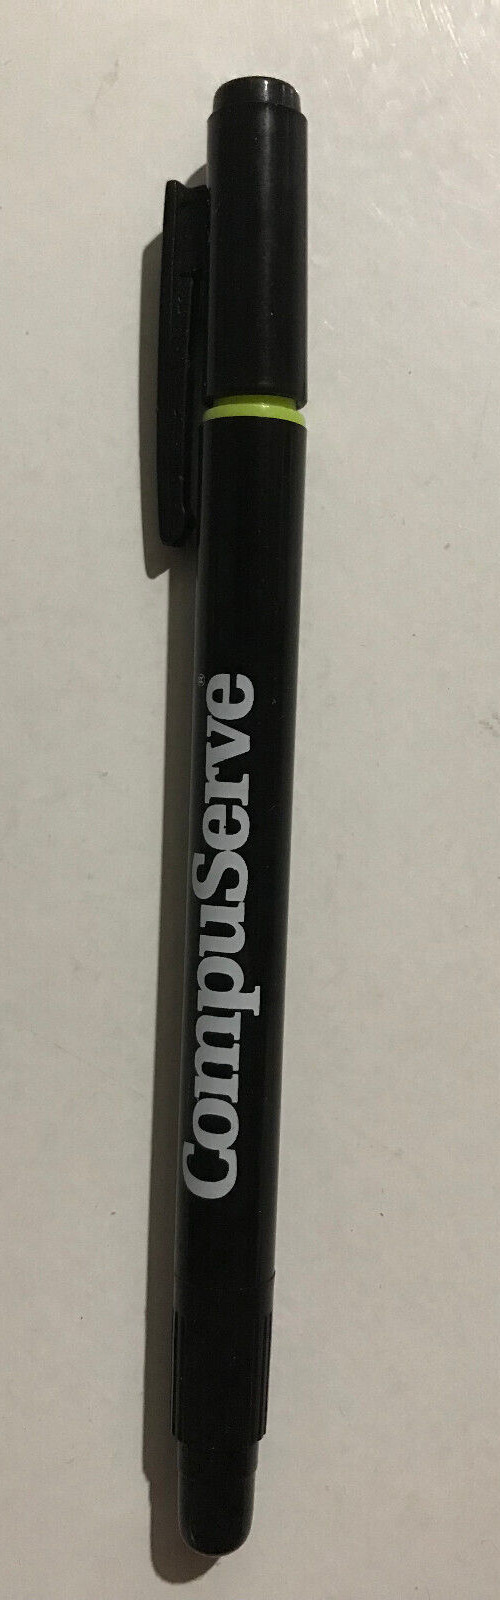 Vintage Compuserve Highlighter Pen - Very Rare